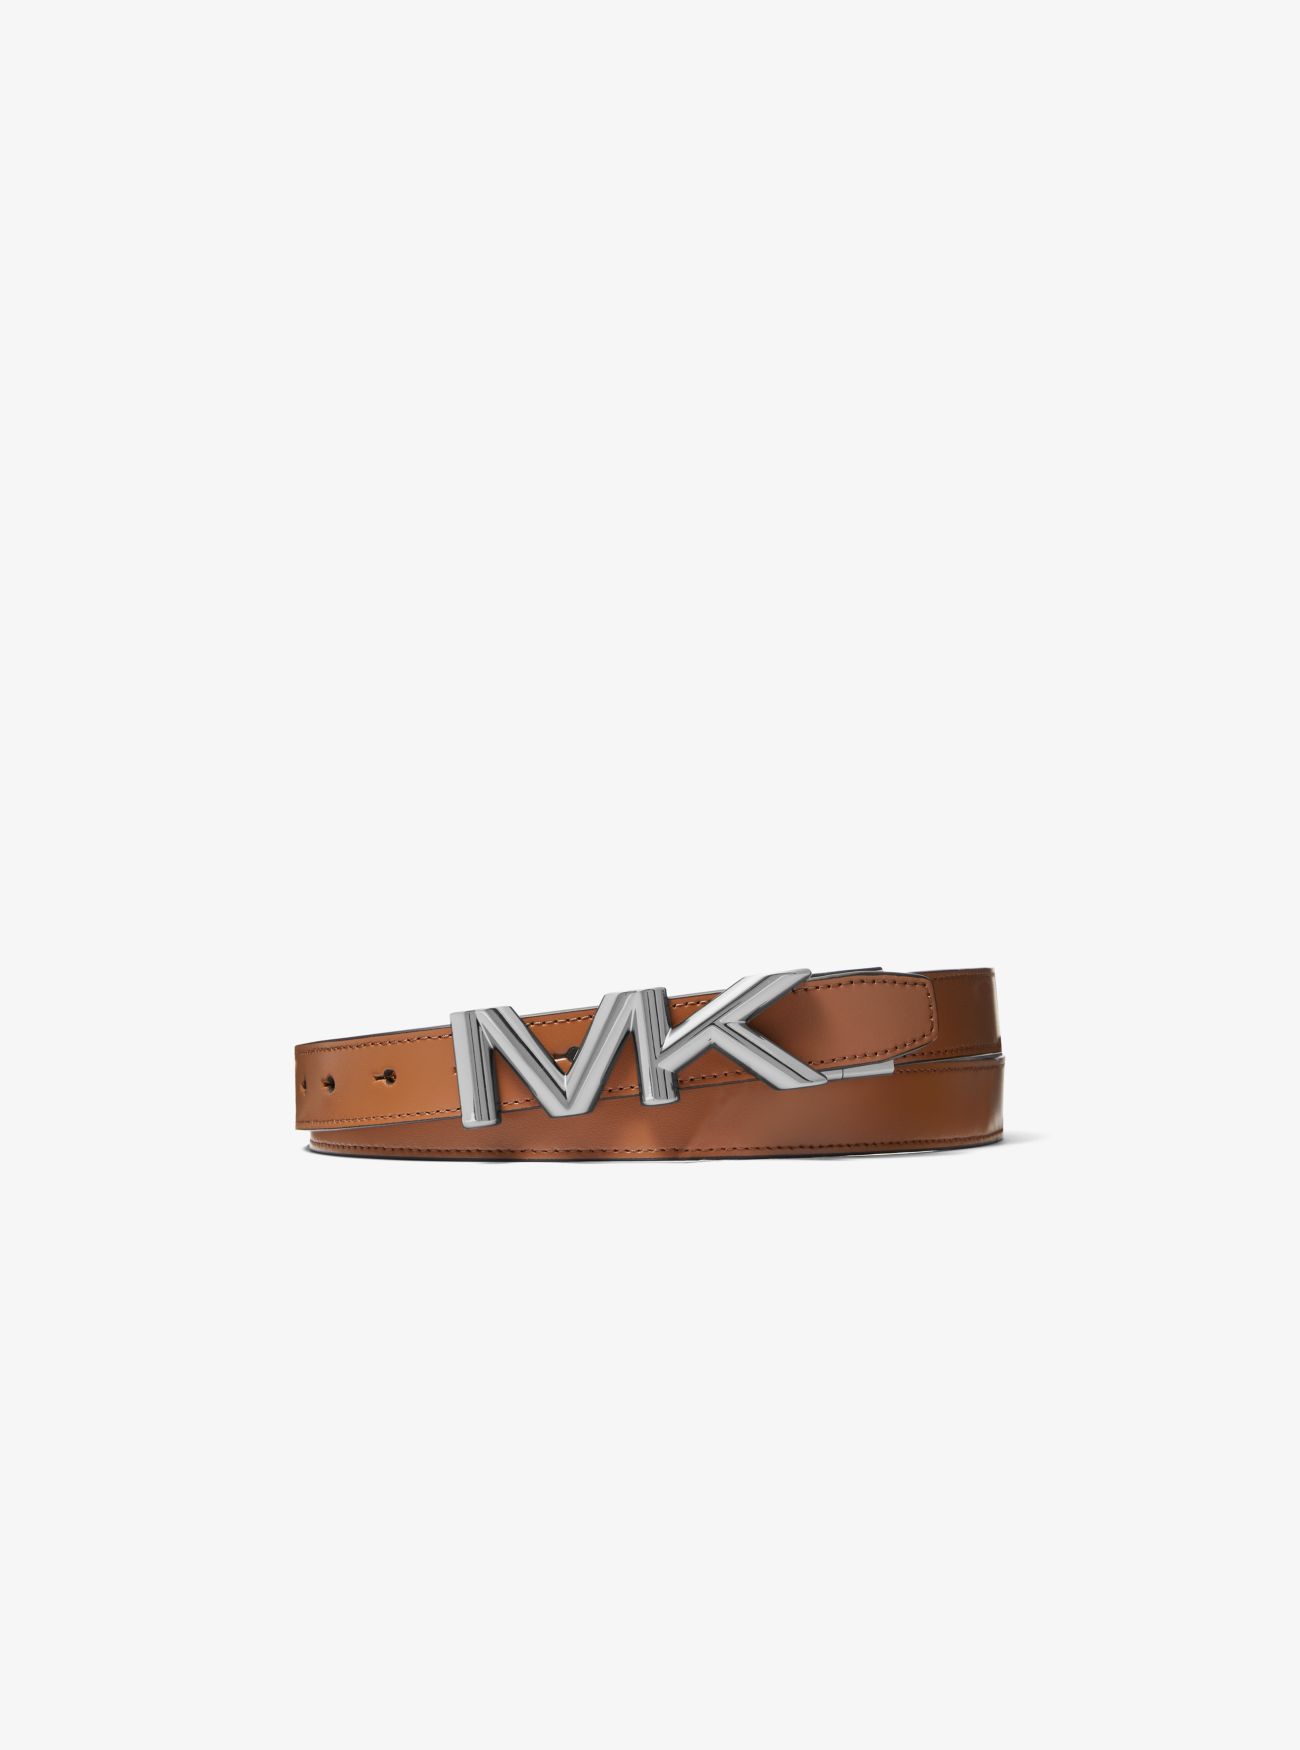 MK Reversible Leather Belt - Brown - Michael Kors